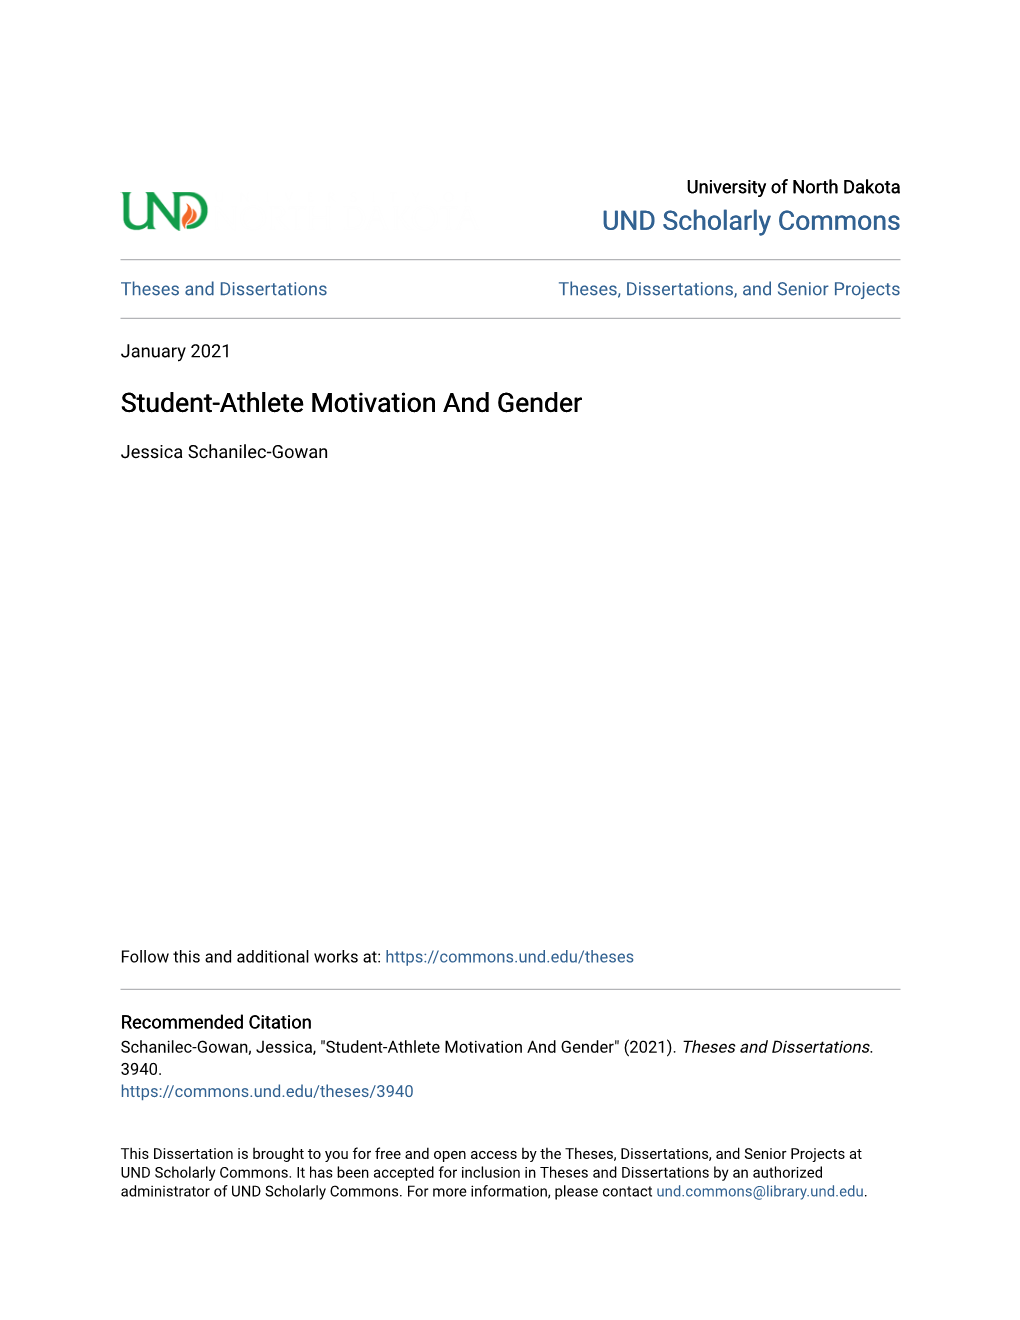 Student-Athlete Motivation and Gender